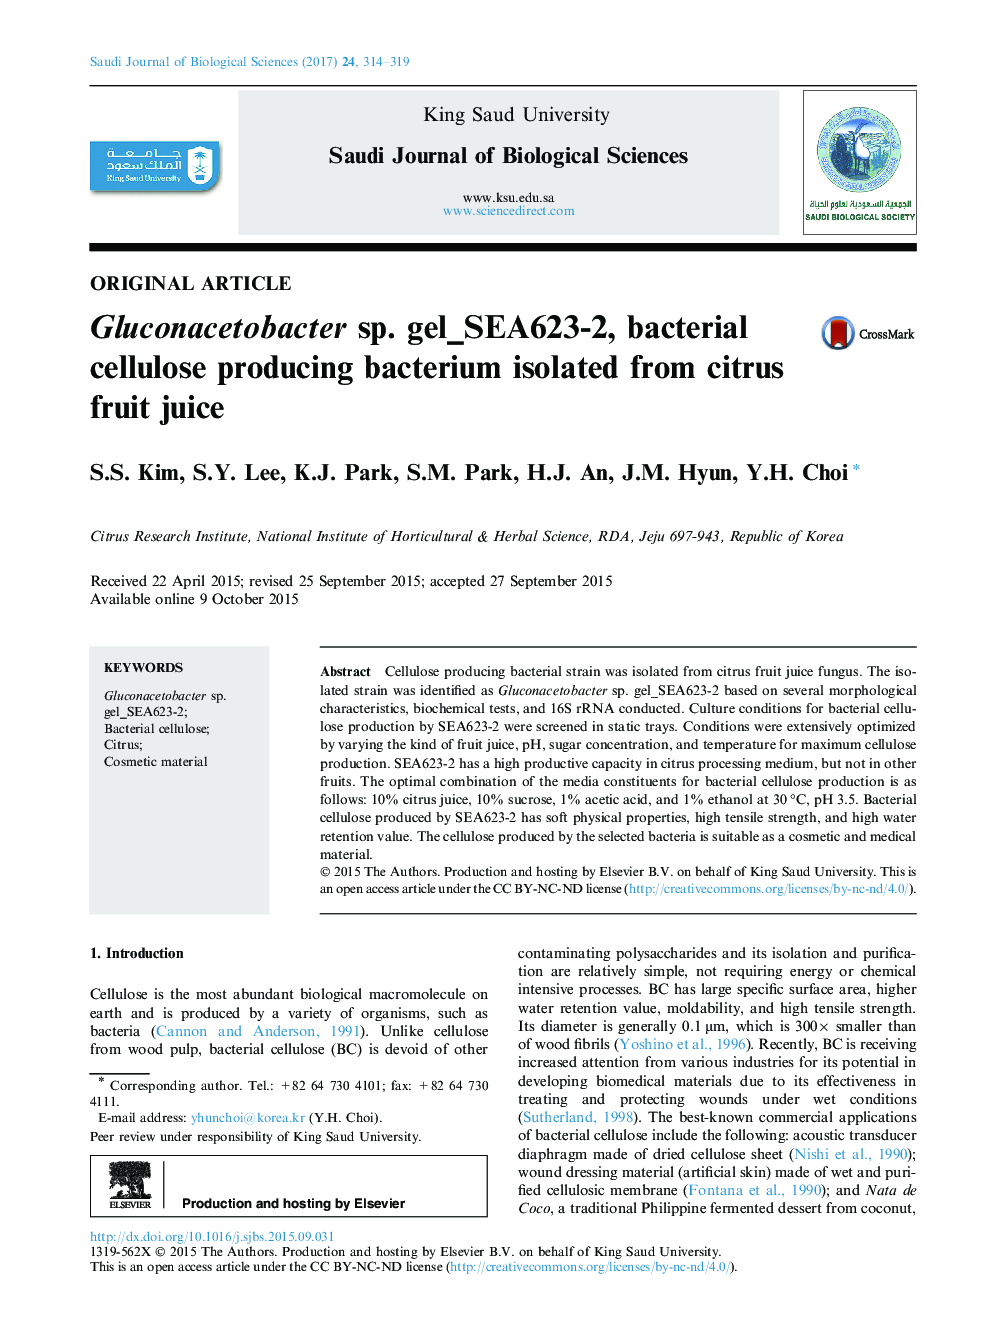 Original articleGluconacetobacter sp. gel_SEA623-2, bacterial cellulose producing bacterium isolated from citrus fruit juice